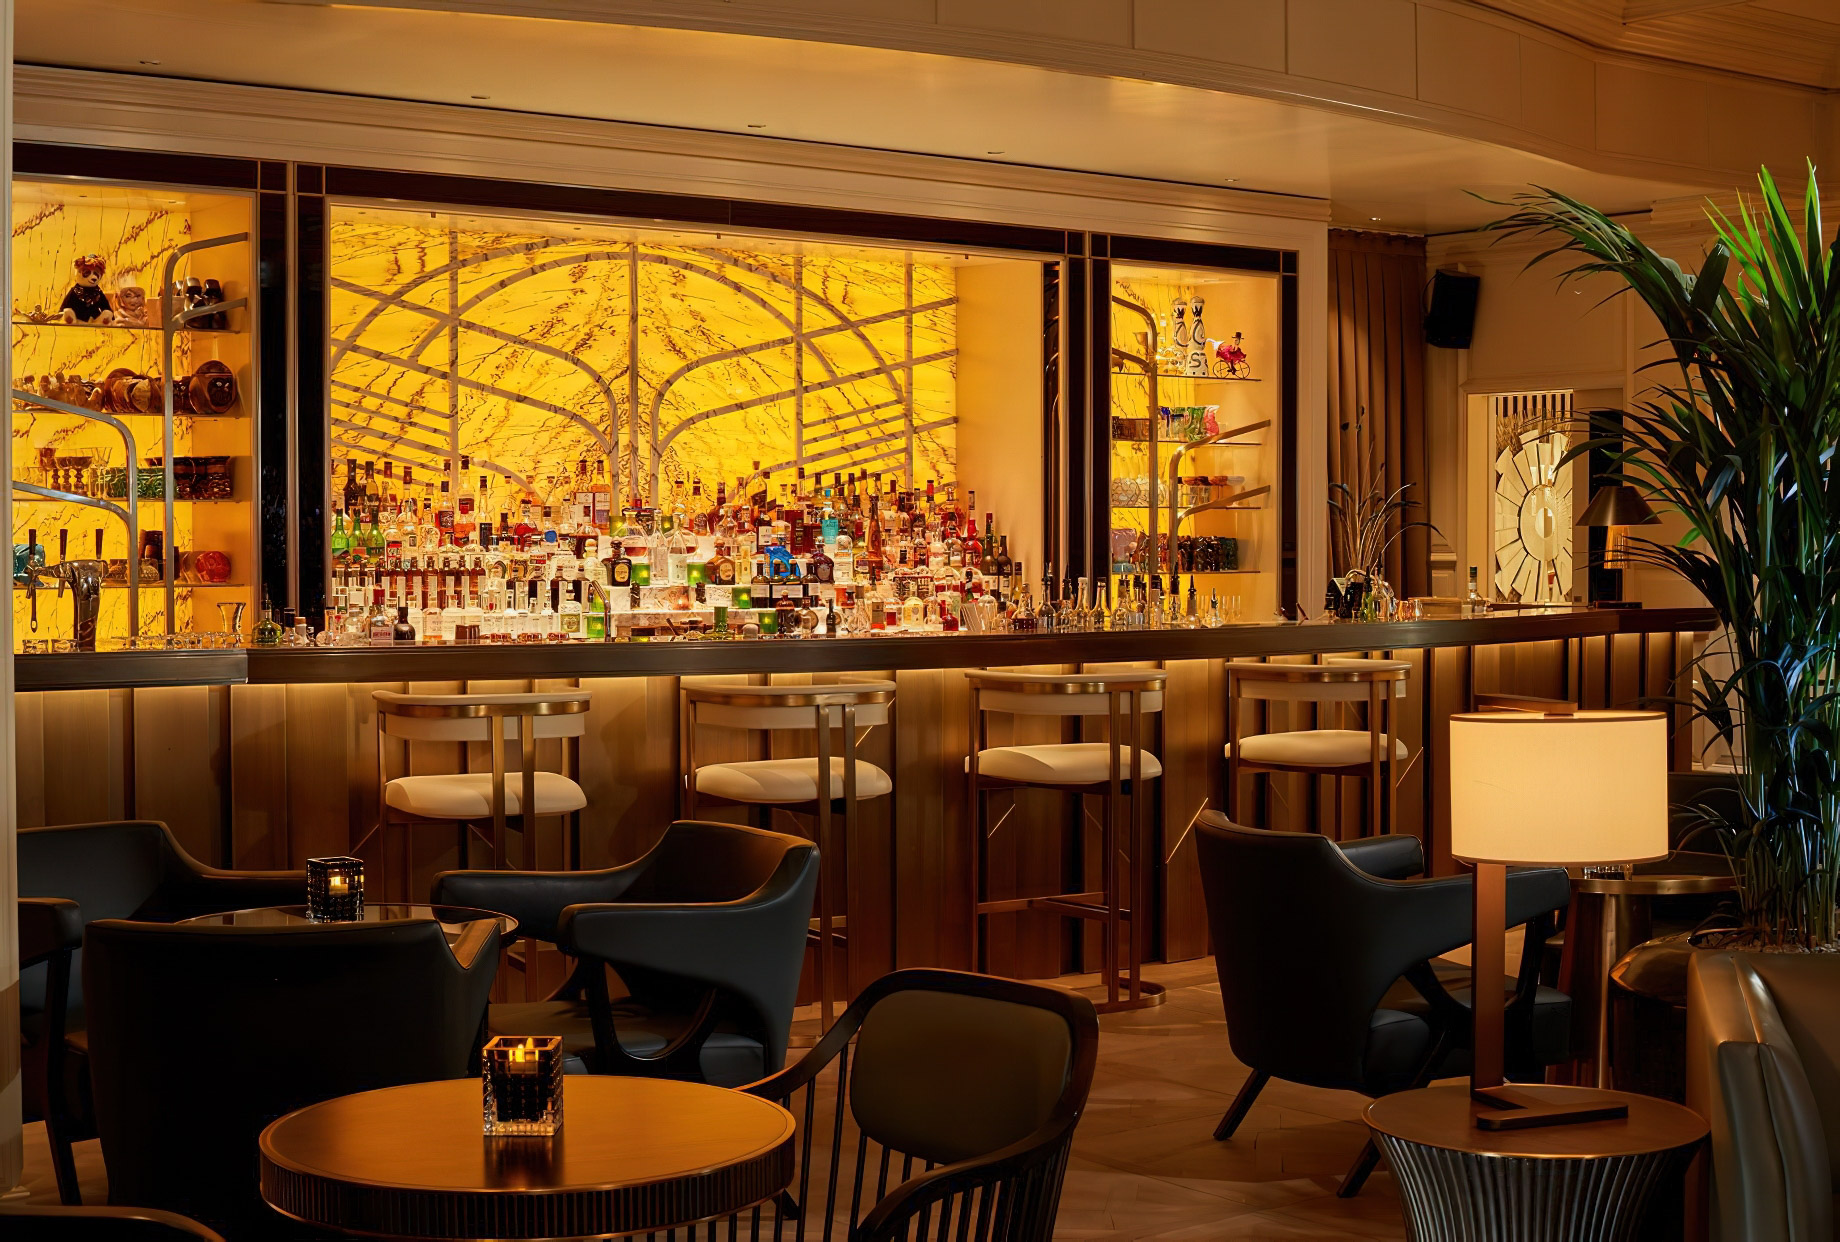 The Ritz-Carlton, Berlin Hotel – Berlin, Germany – The Curtain Club Bar